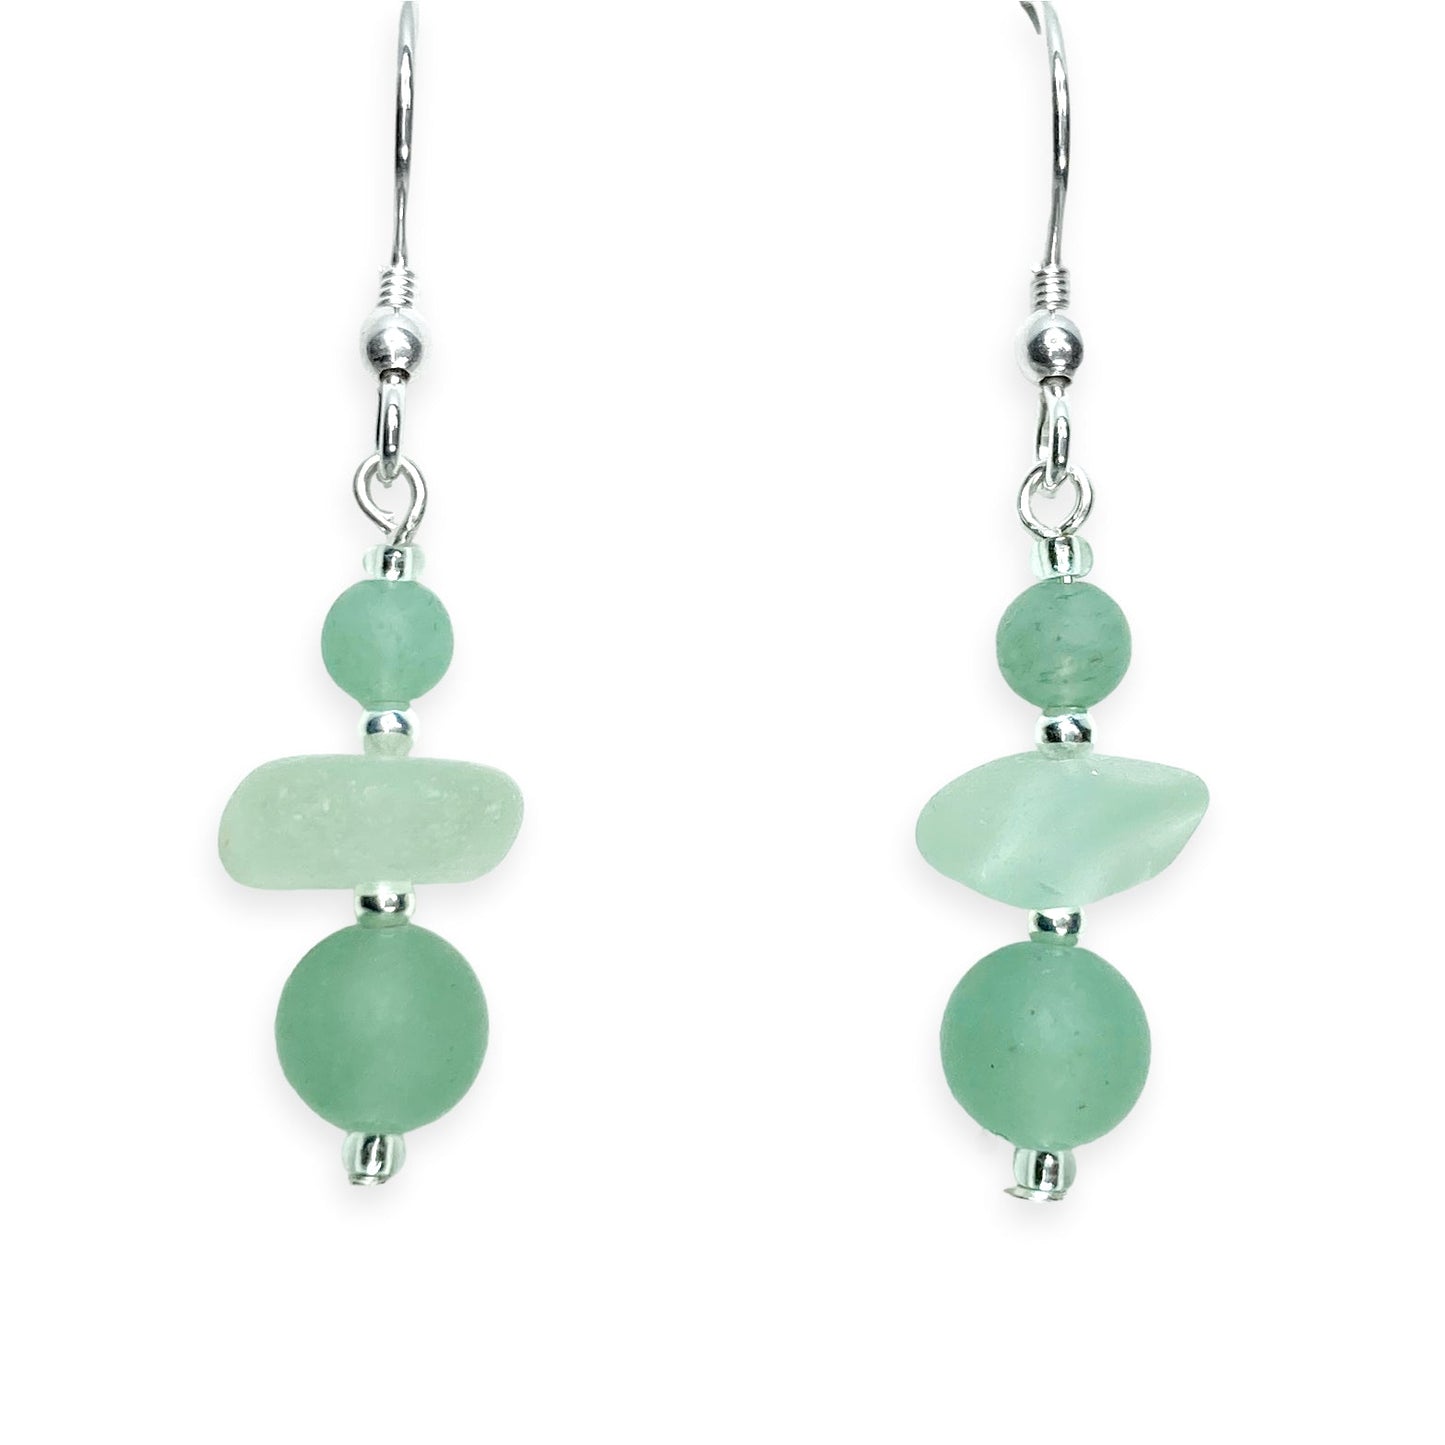 Green Sea Glass Earrings - Sterling Silver Beaded Earrings with Aventurine Crystal - East Neuk Beach Crafts